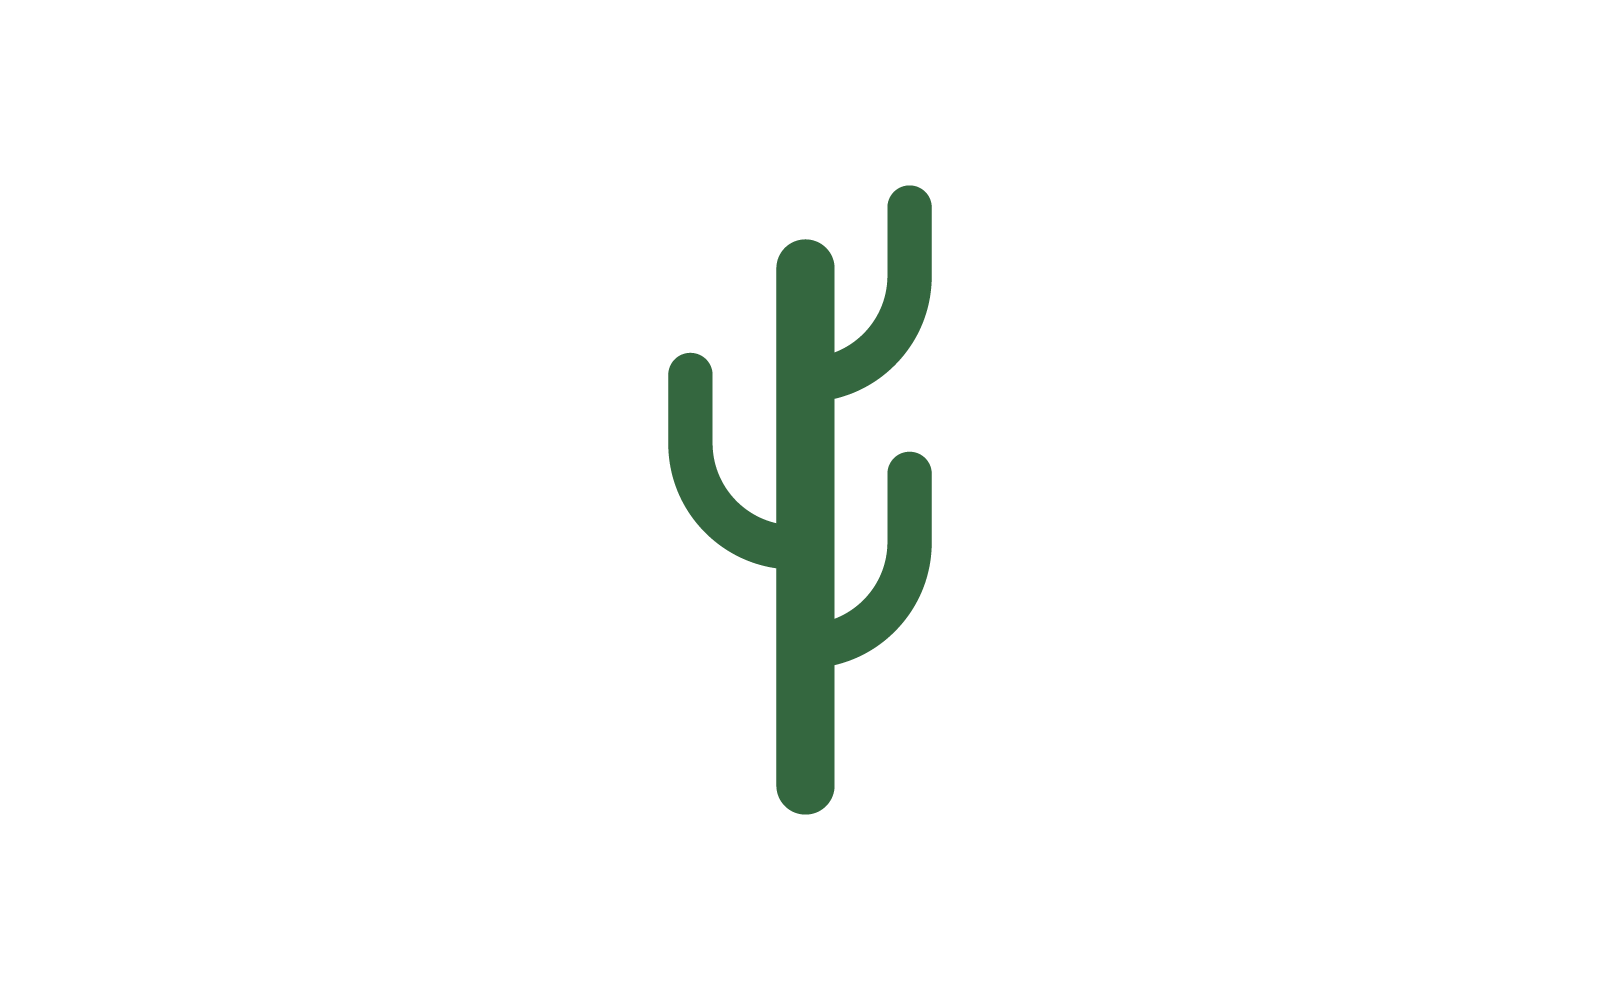 Cactus design Logo icon template vector illustration